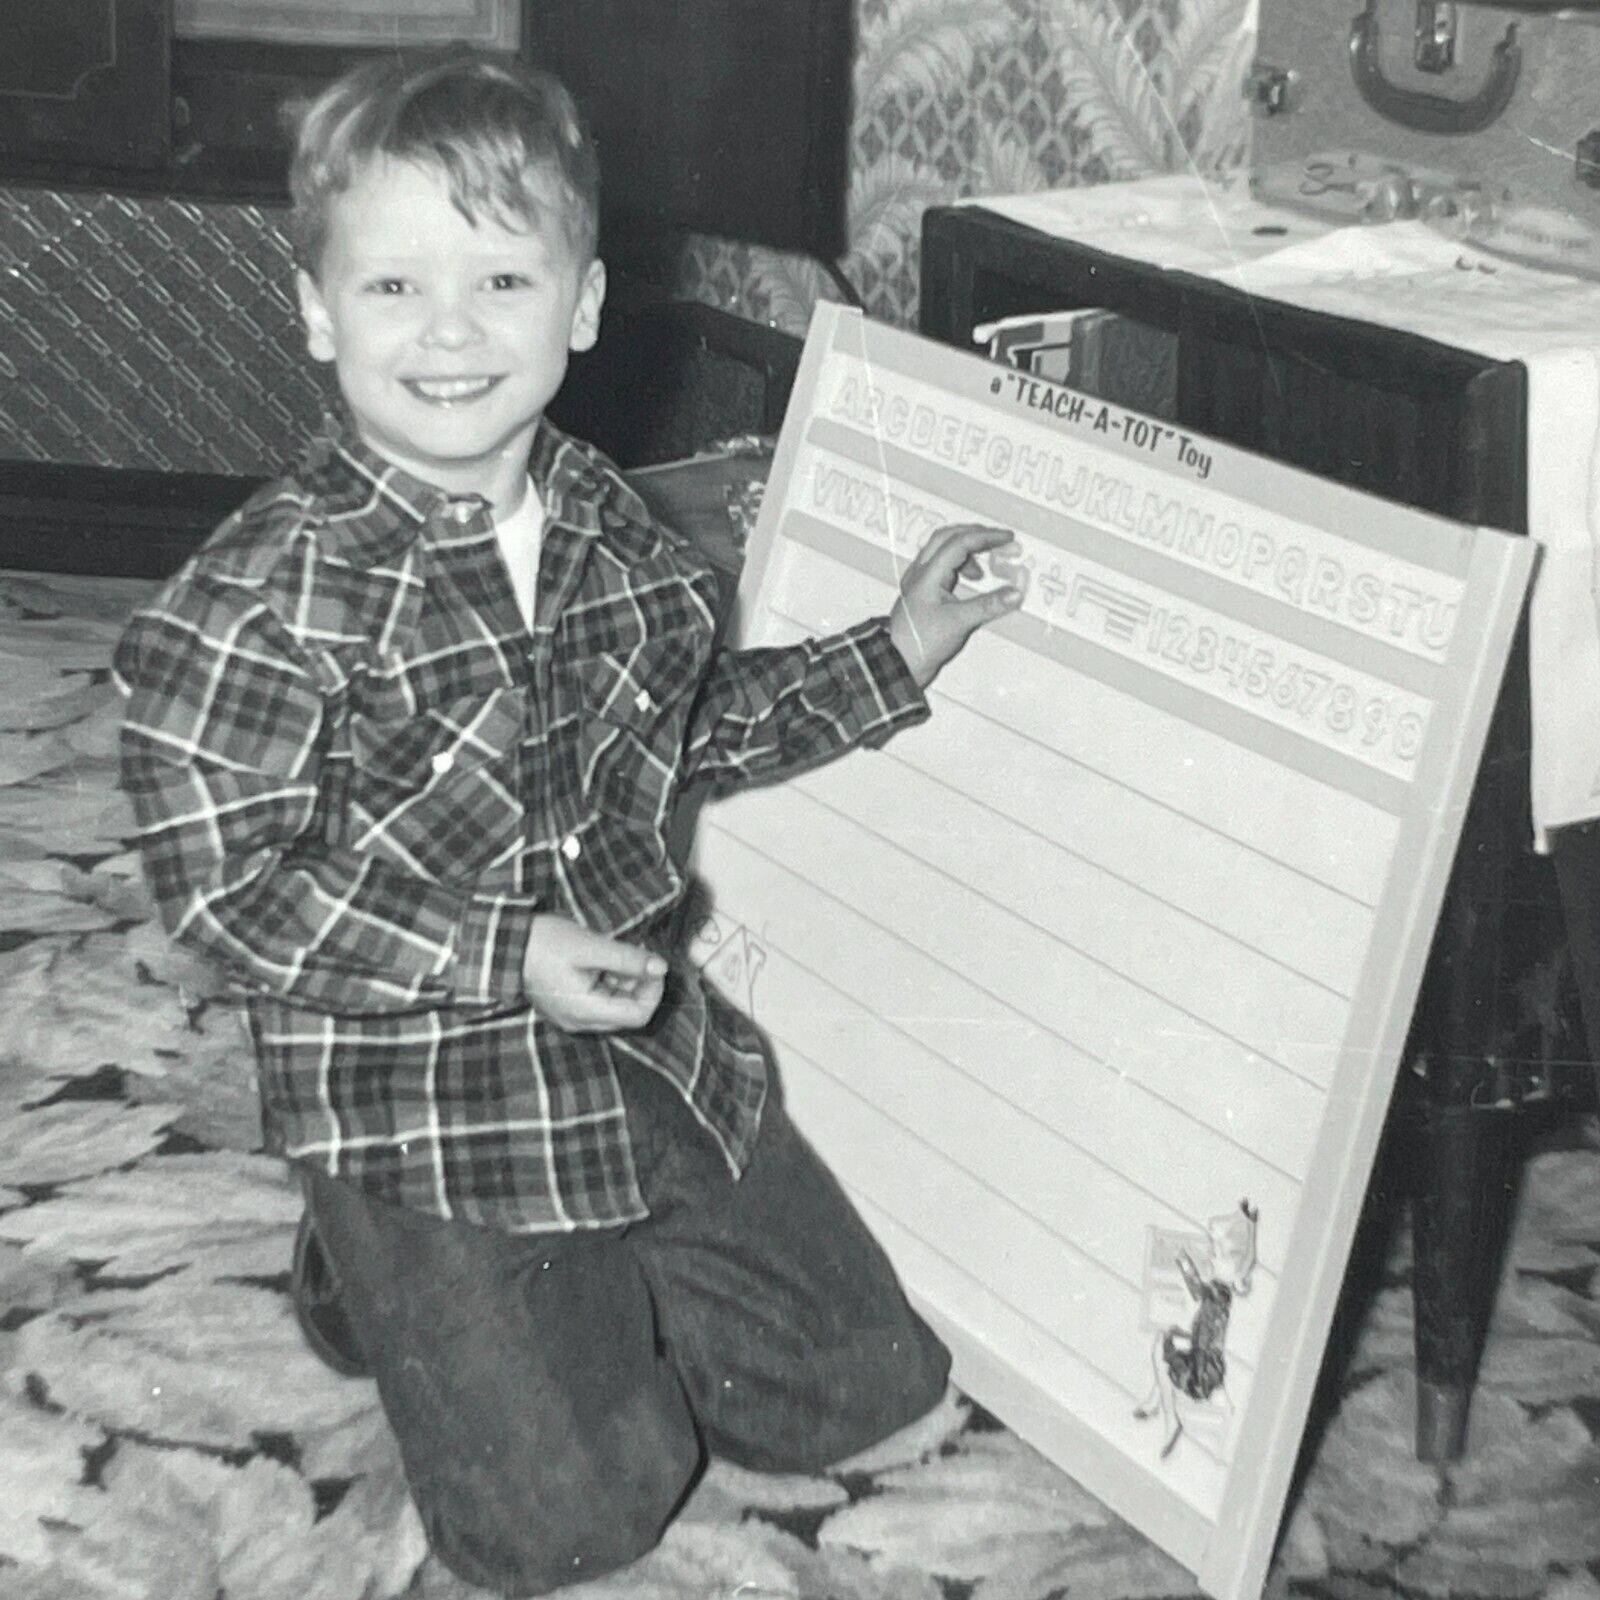 LH Photograph Happy Boy TEACH A TOT TOY Writing Board